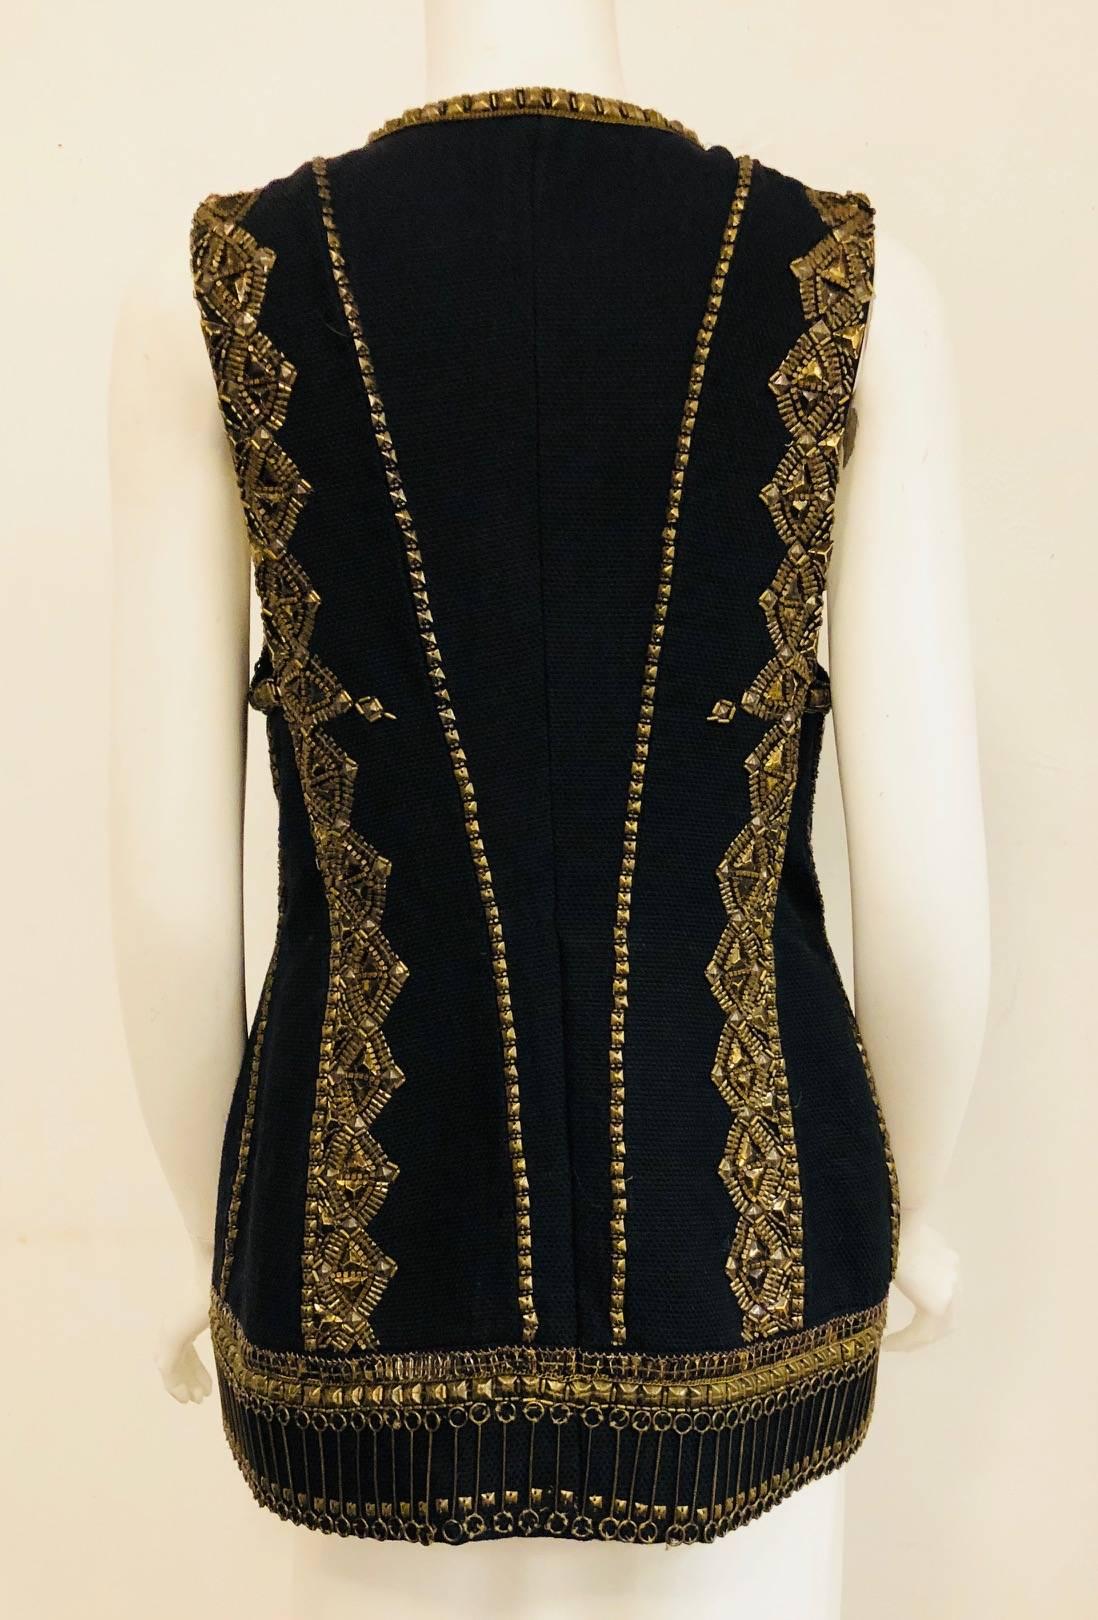 Women's Dynamic Dries van Noten Black Wool and Cotton Metal Embellished Vest Jacket